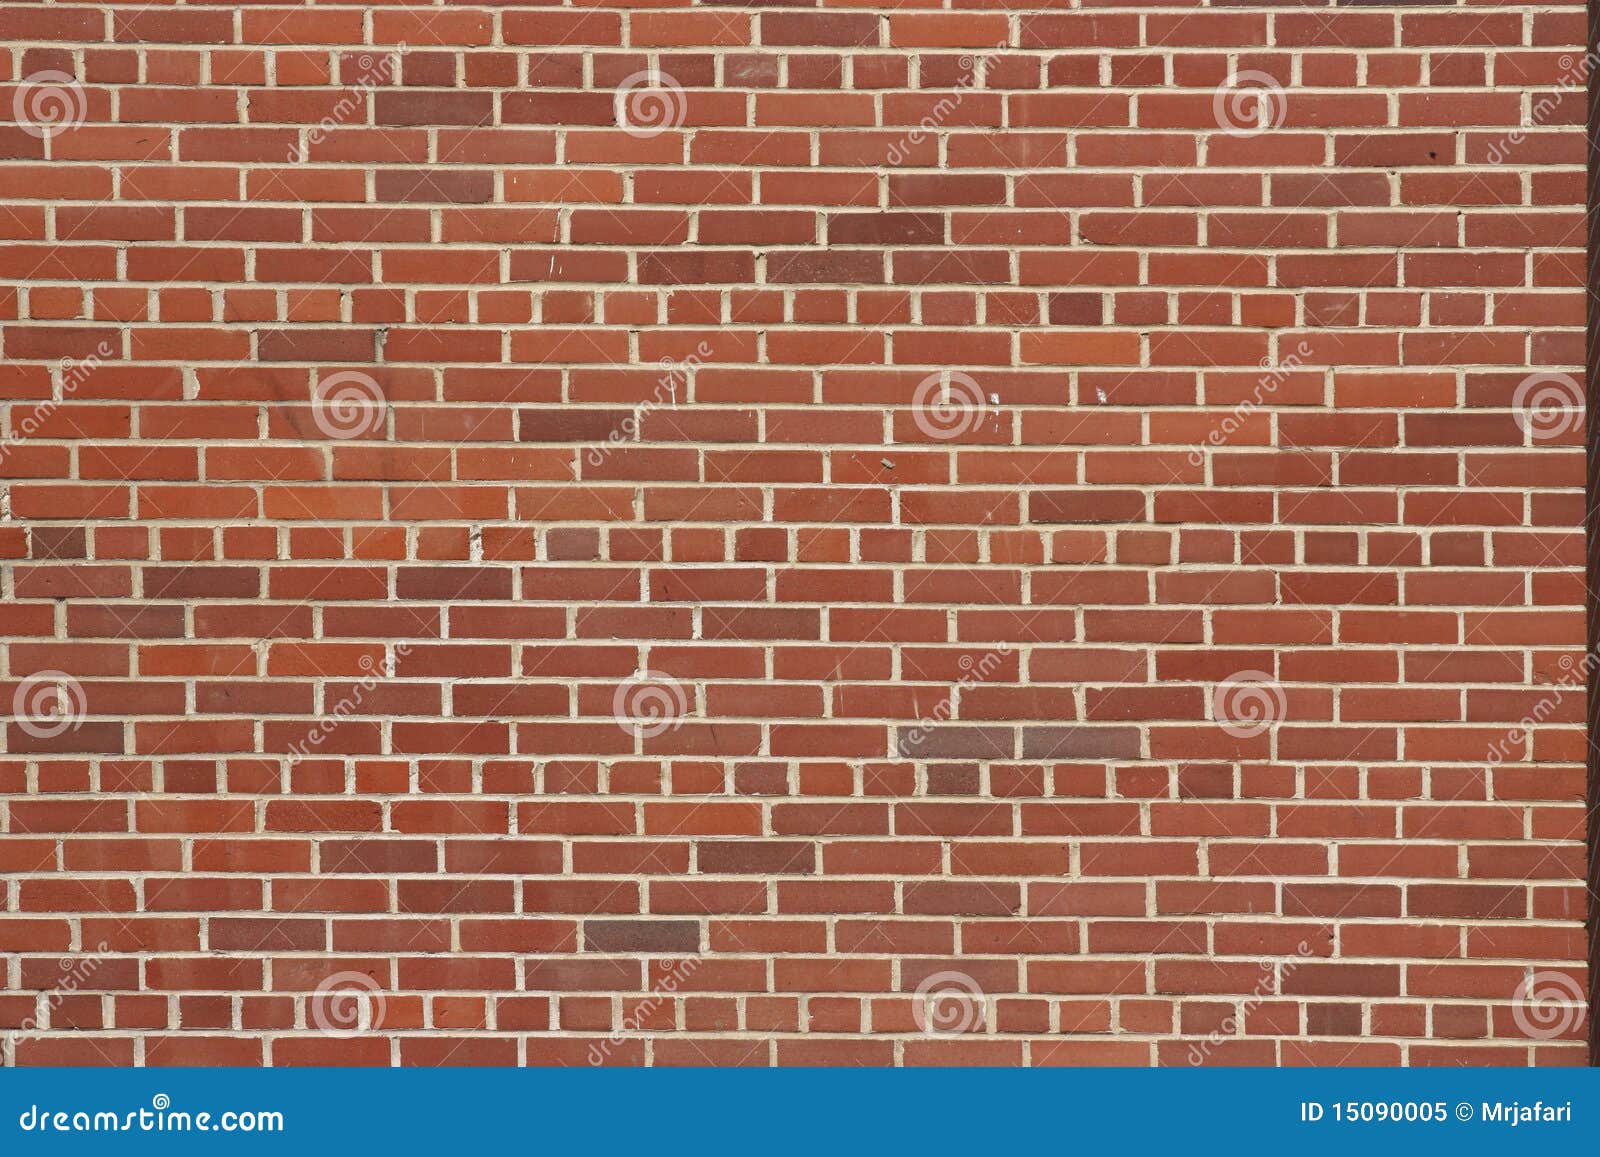 bricks in wall